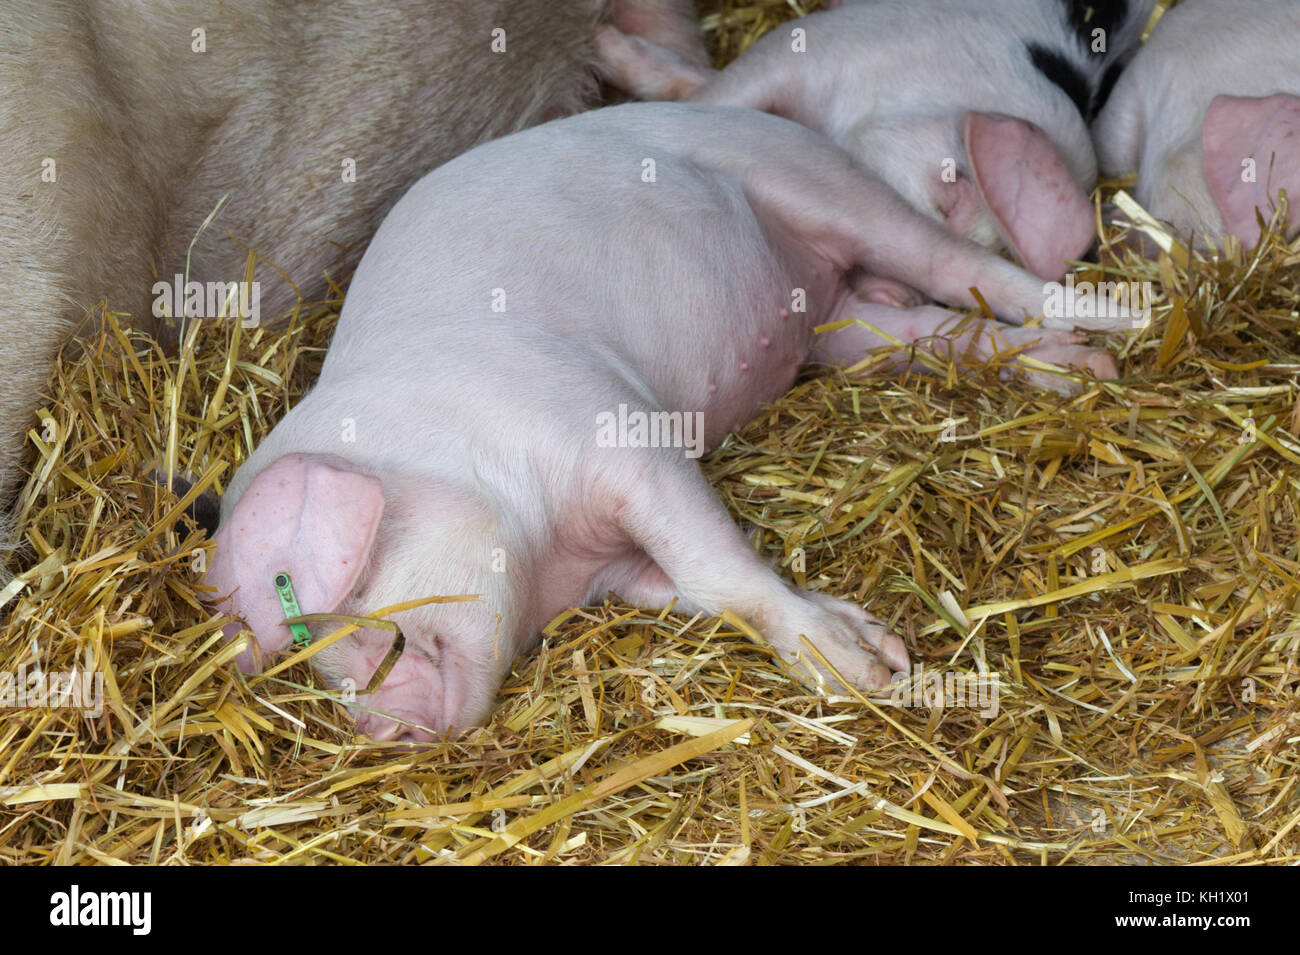 sleeping piglets in a straw pen Stock Photo